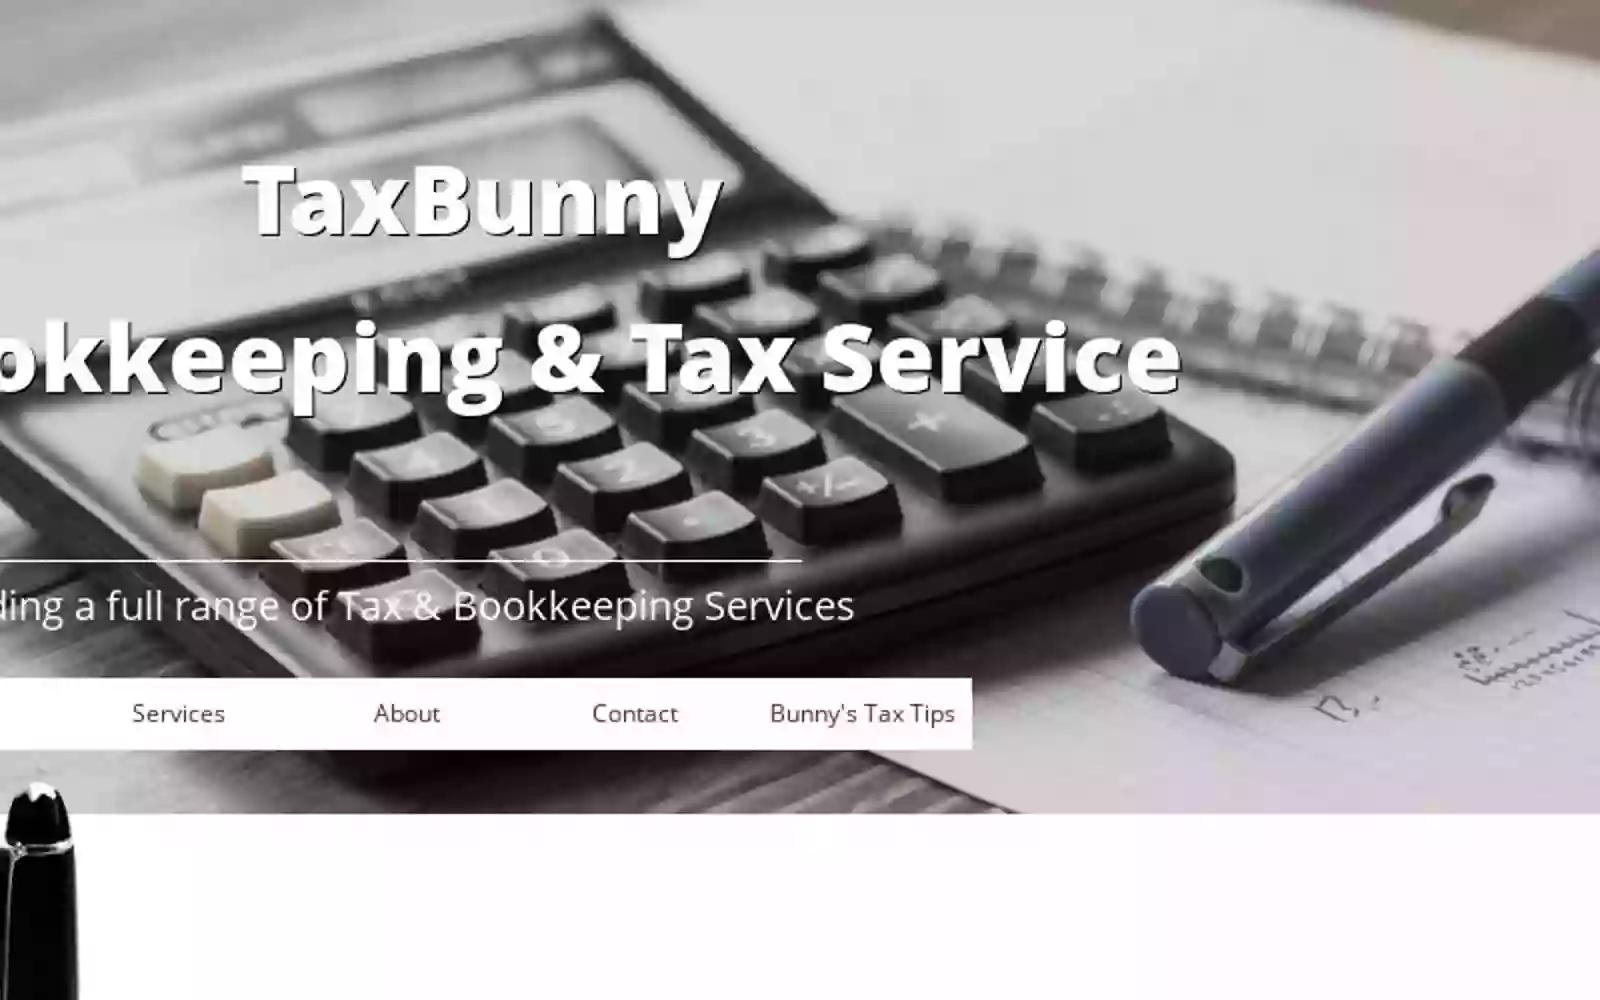 Taxbunny Bookkeeping & Tax Service